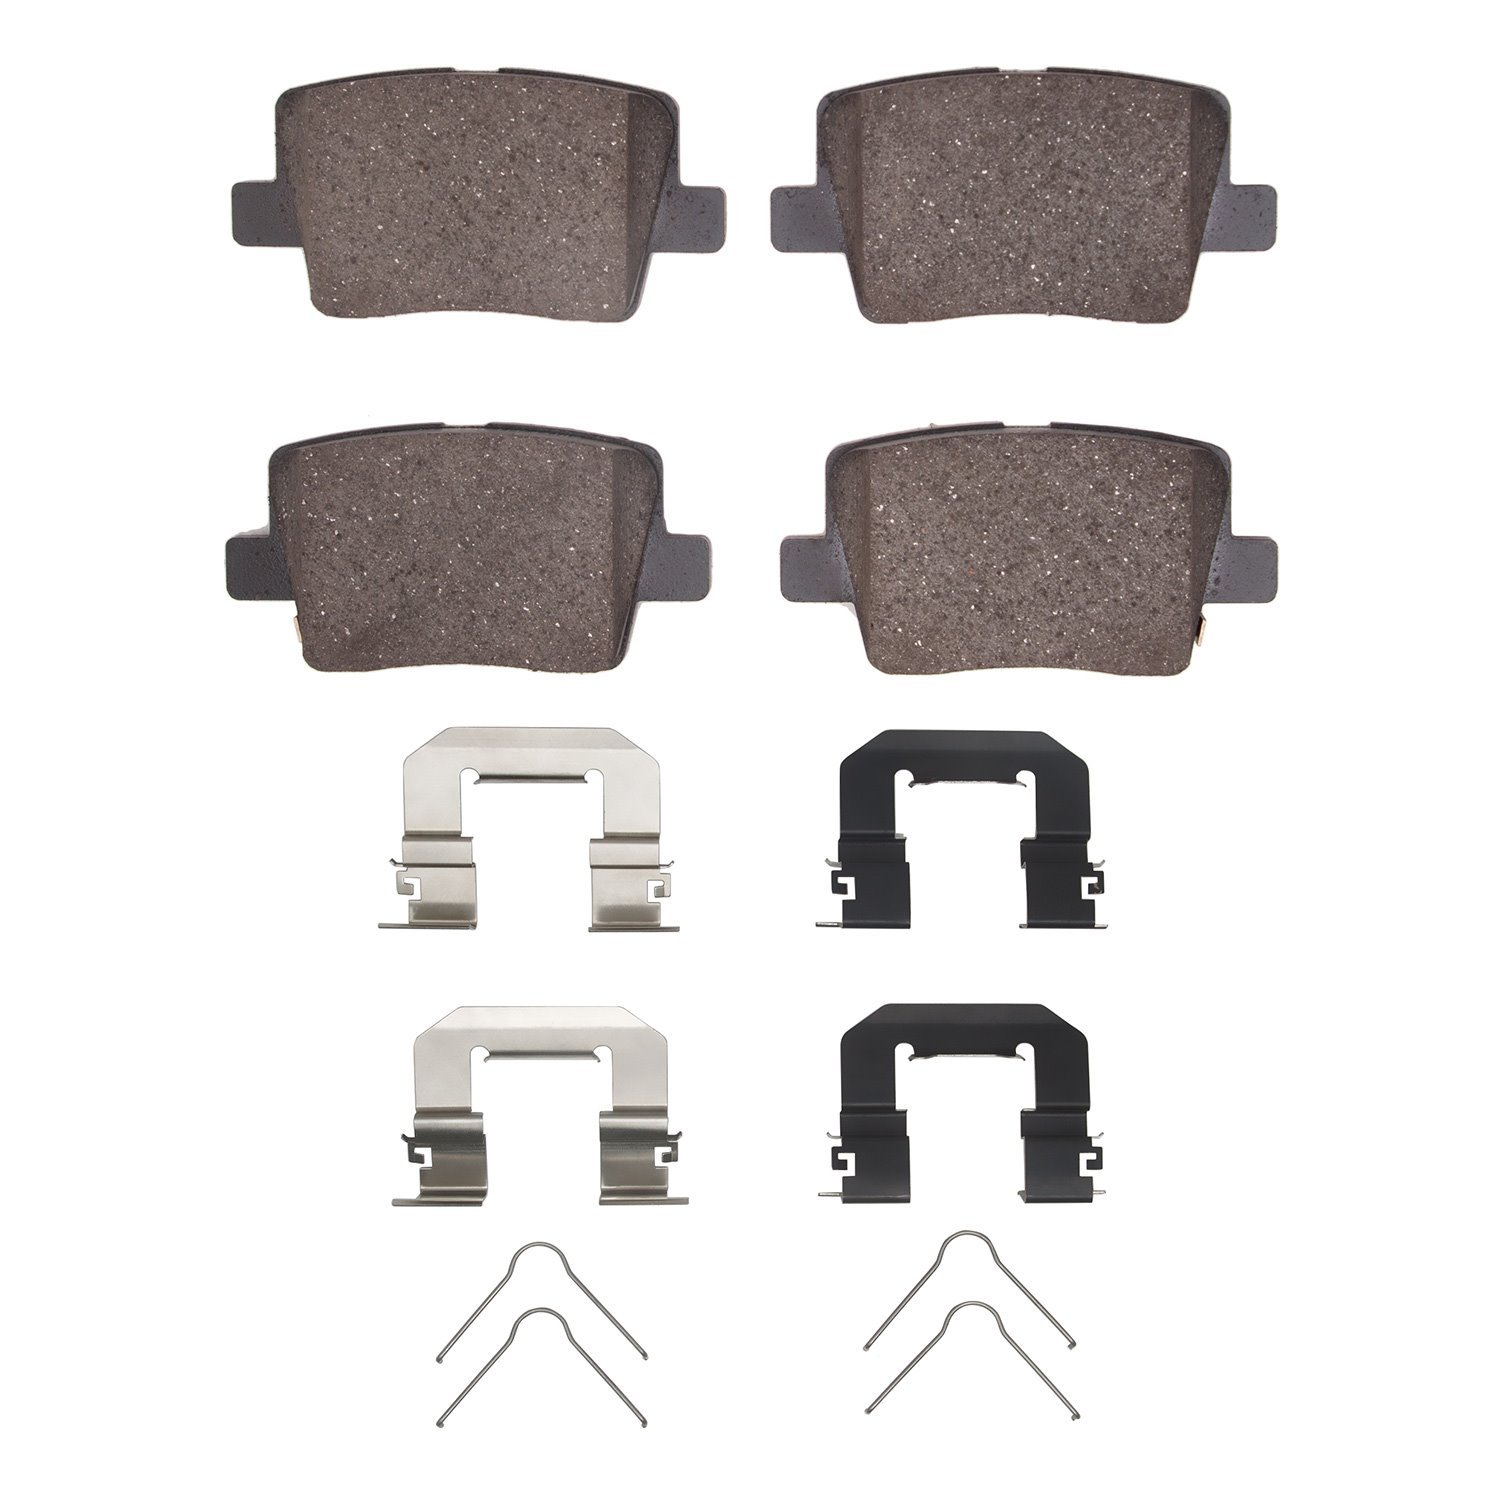 1551-2203-01 5000 Advanced Ceramic Brake Pads & Hardware Kit, Fits Select Kia/Hyundai/Genesis, Position: Rear